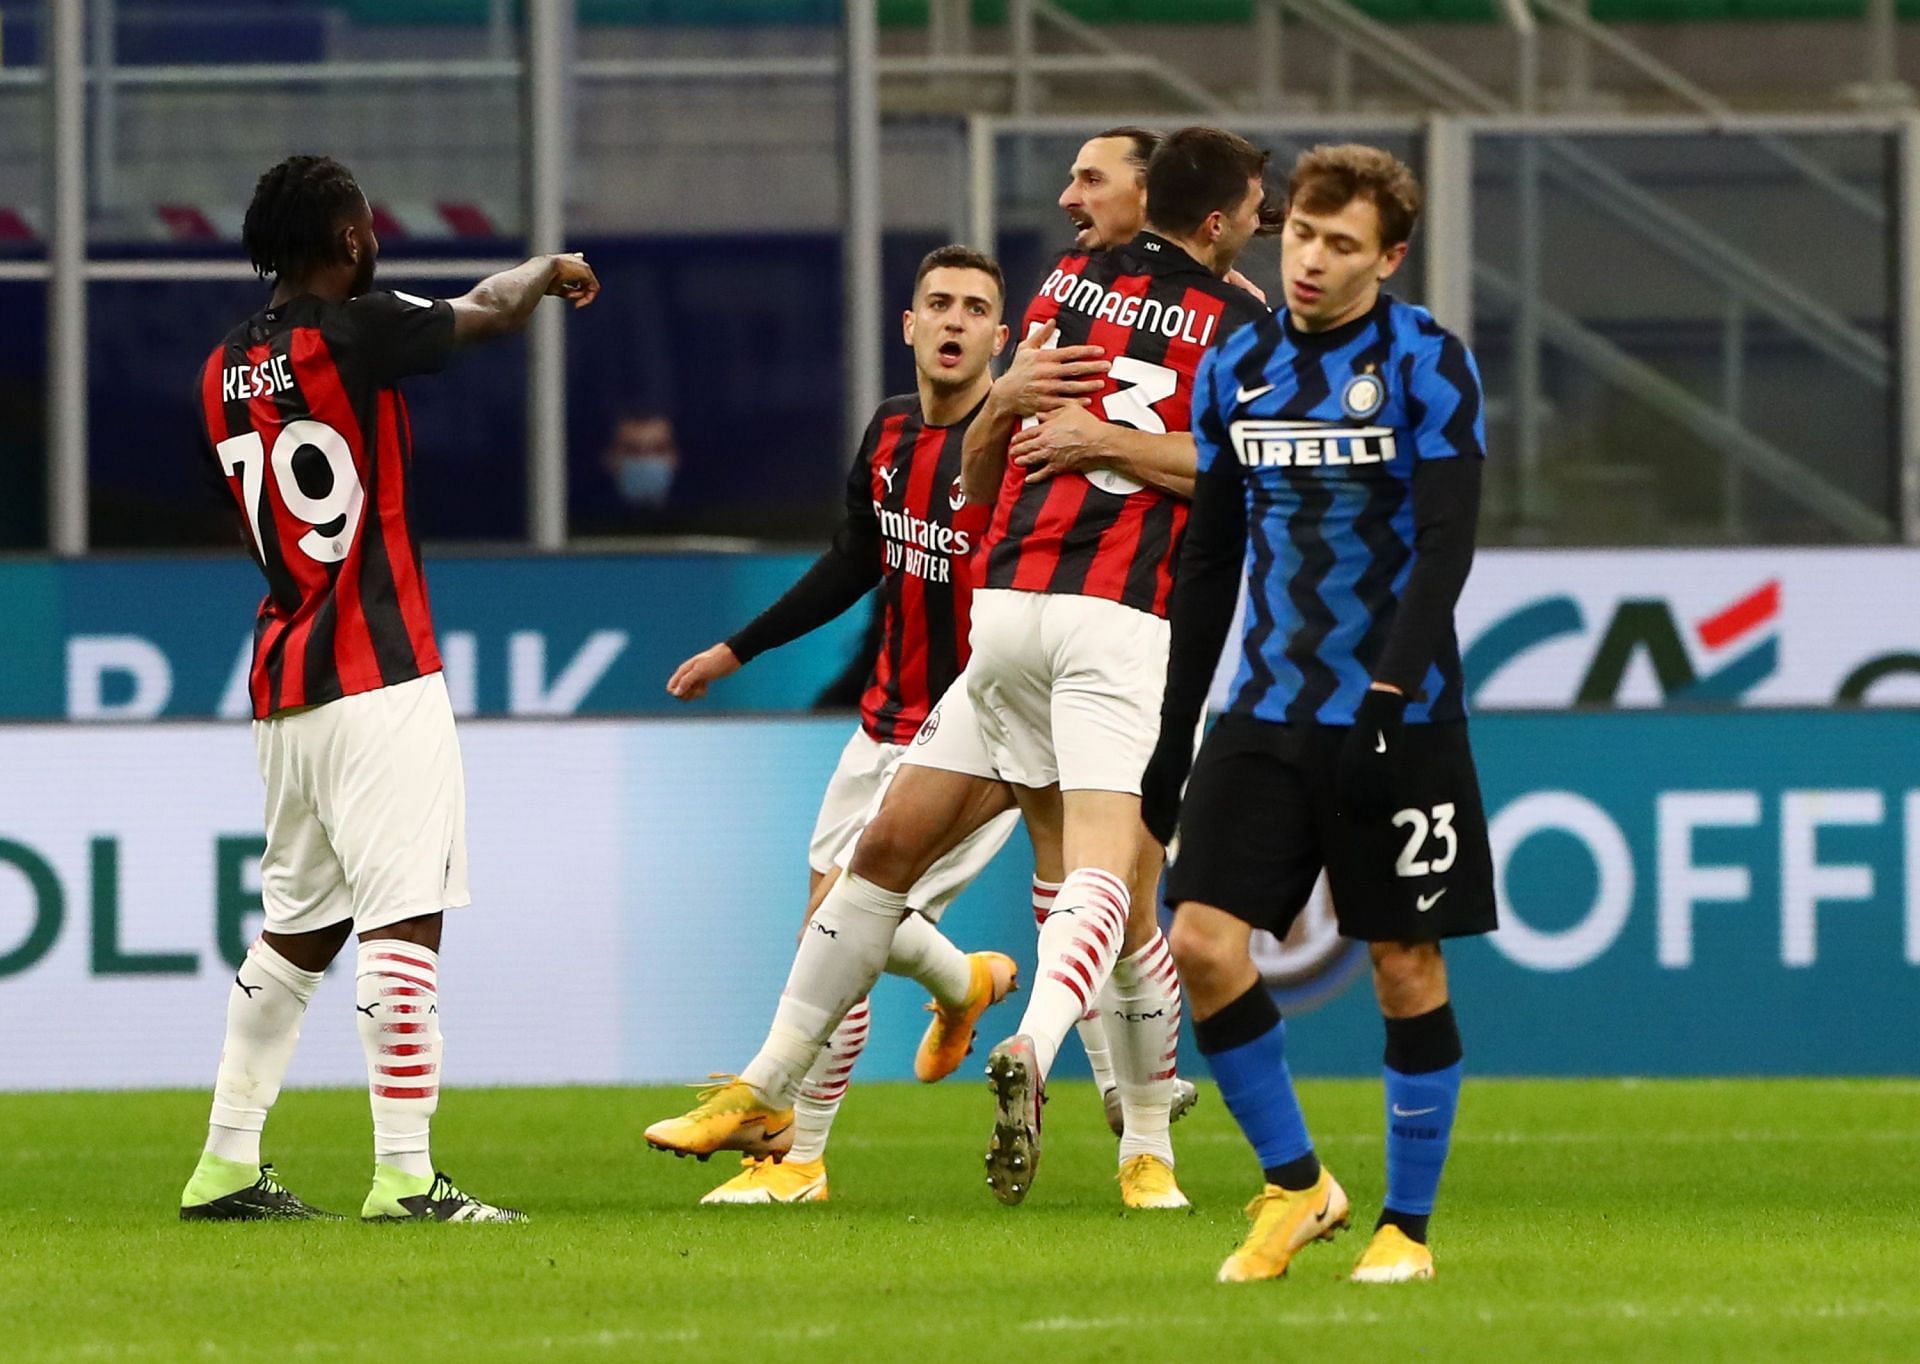 Milan inter vs Inter vs